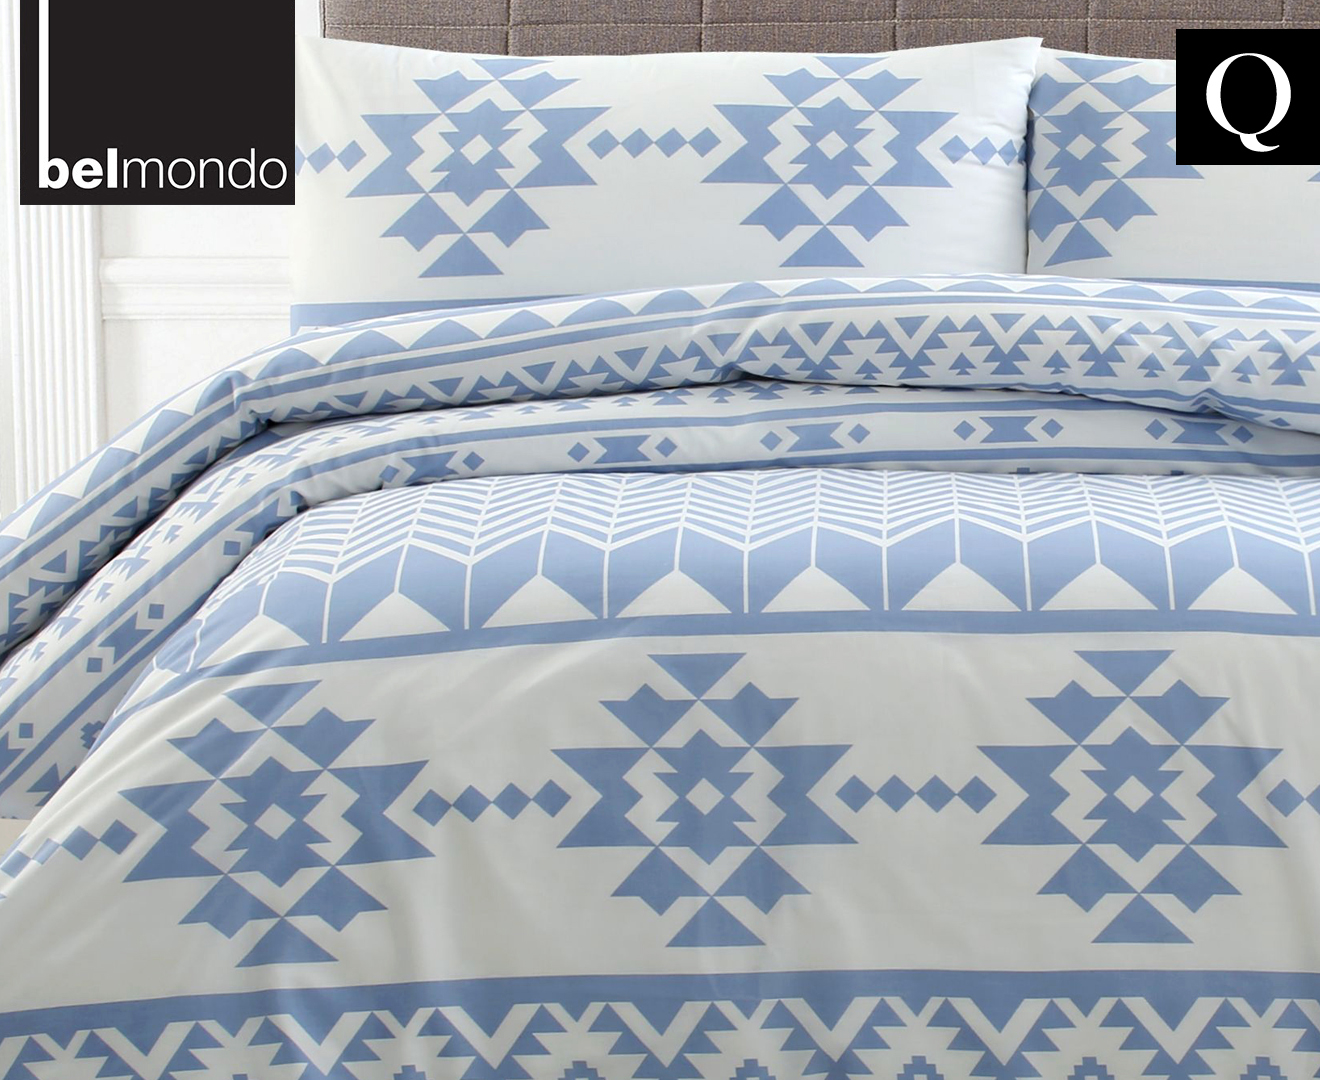 Belmondo Home Kura Queen Bed Quilt Cover Set - Blue/White